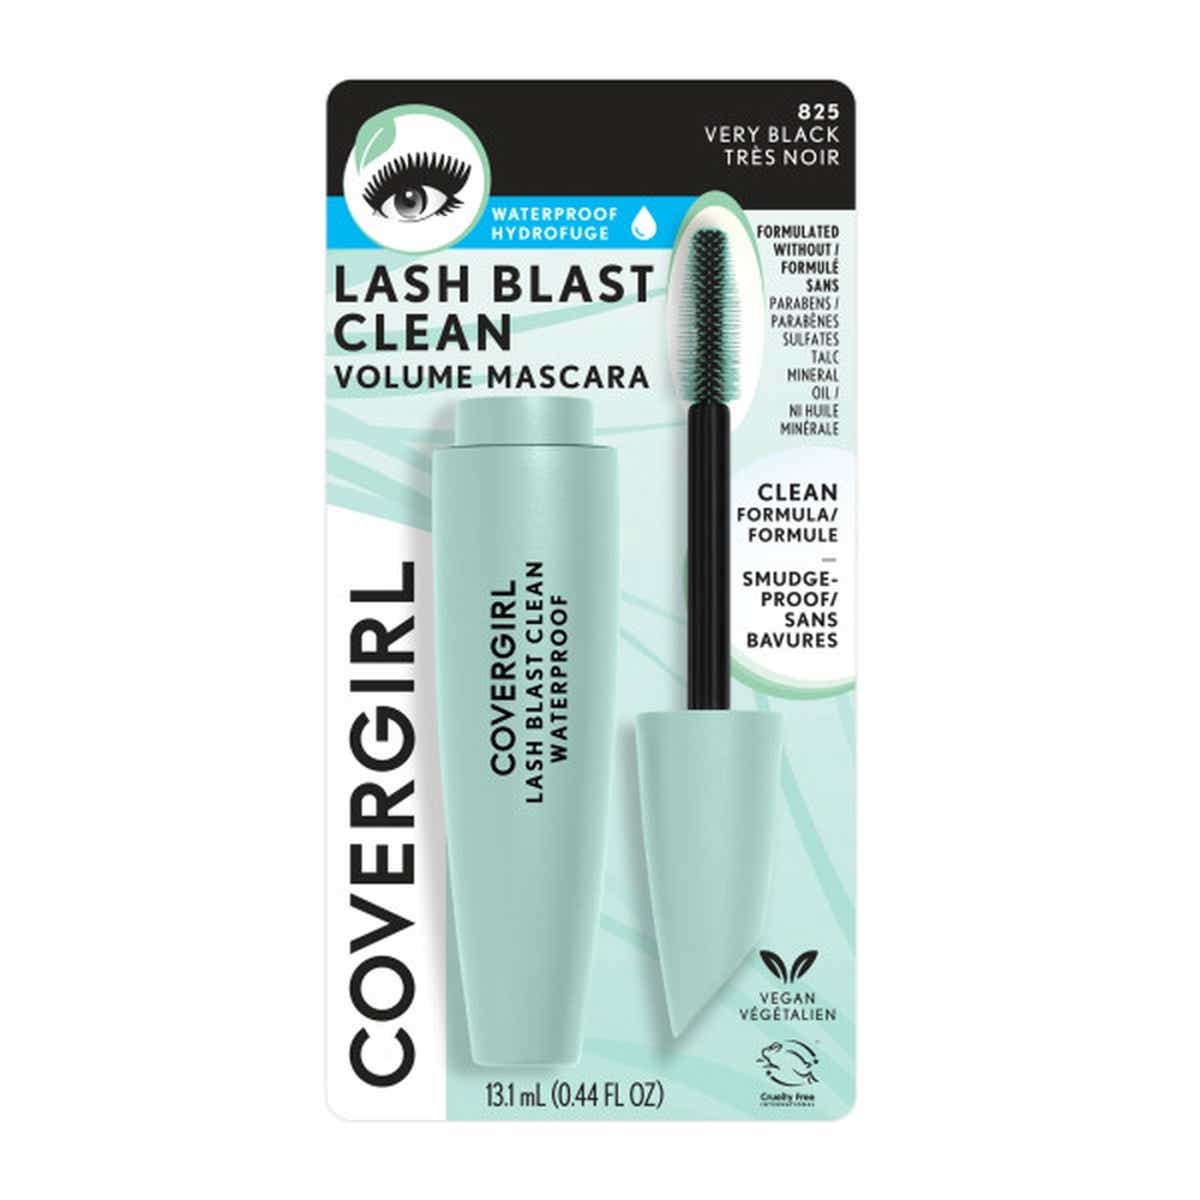 Mascara hydrofuge Lash Blast Clean Volume